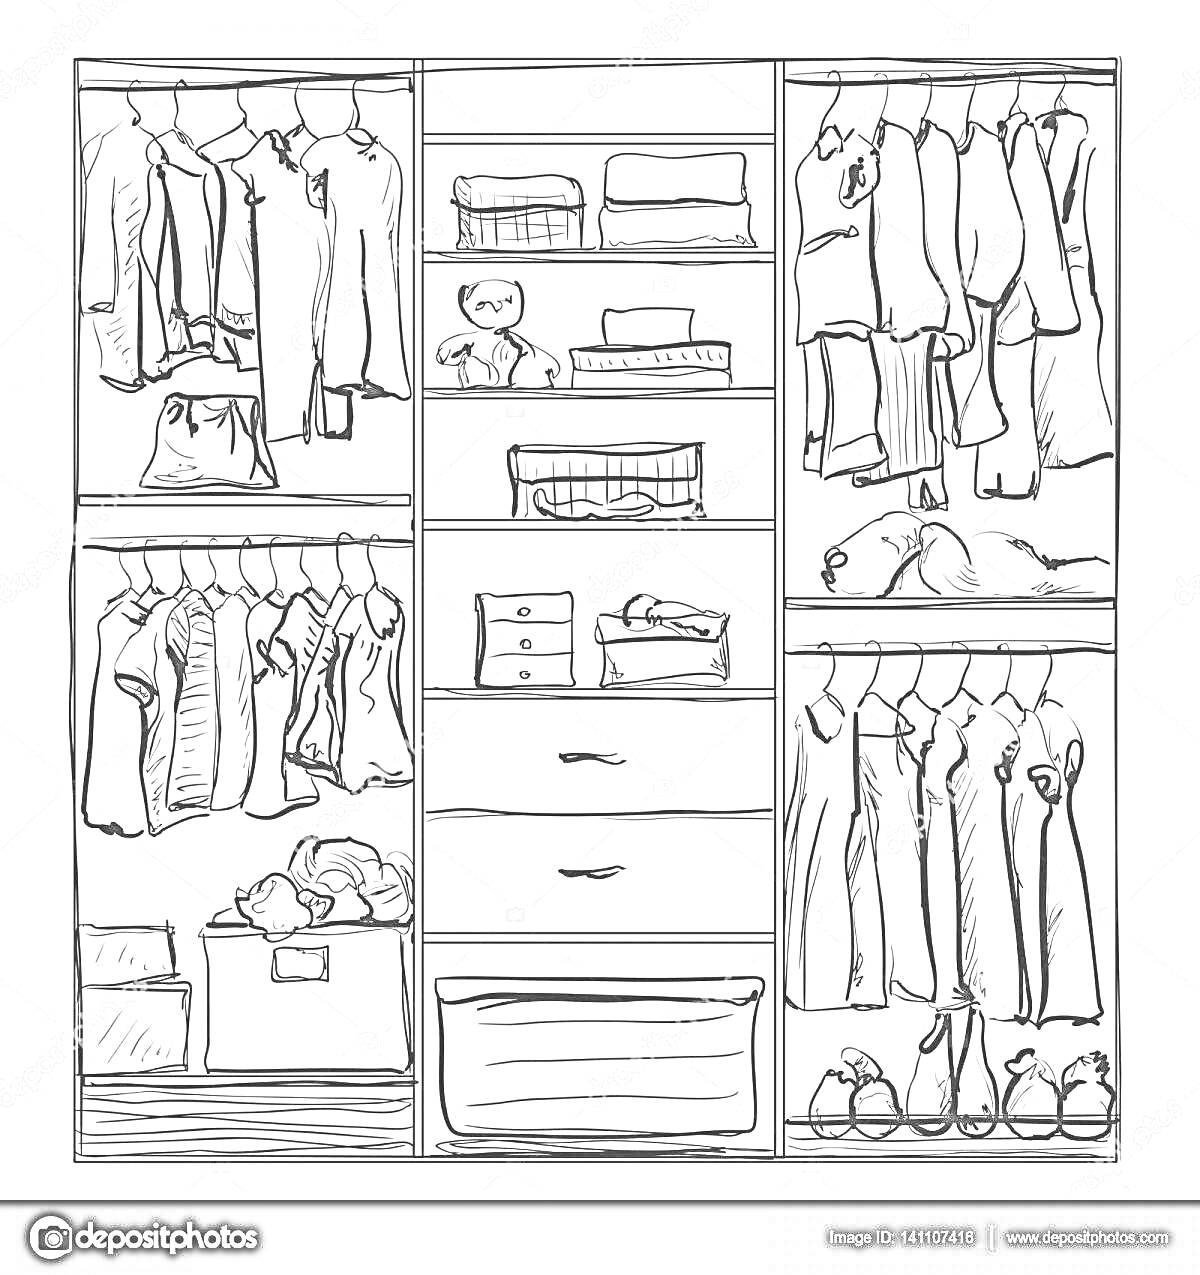 На раскраске изображено: Шкаф, Одежда, Полки, Вешалки, Рубашки, Ящики, Хранение